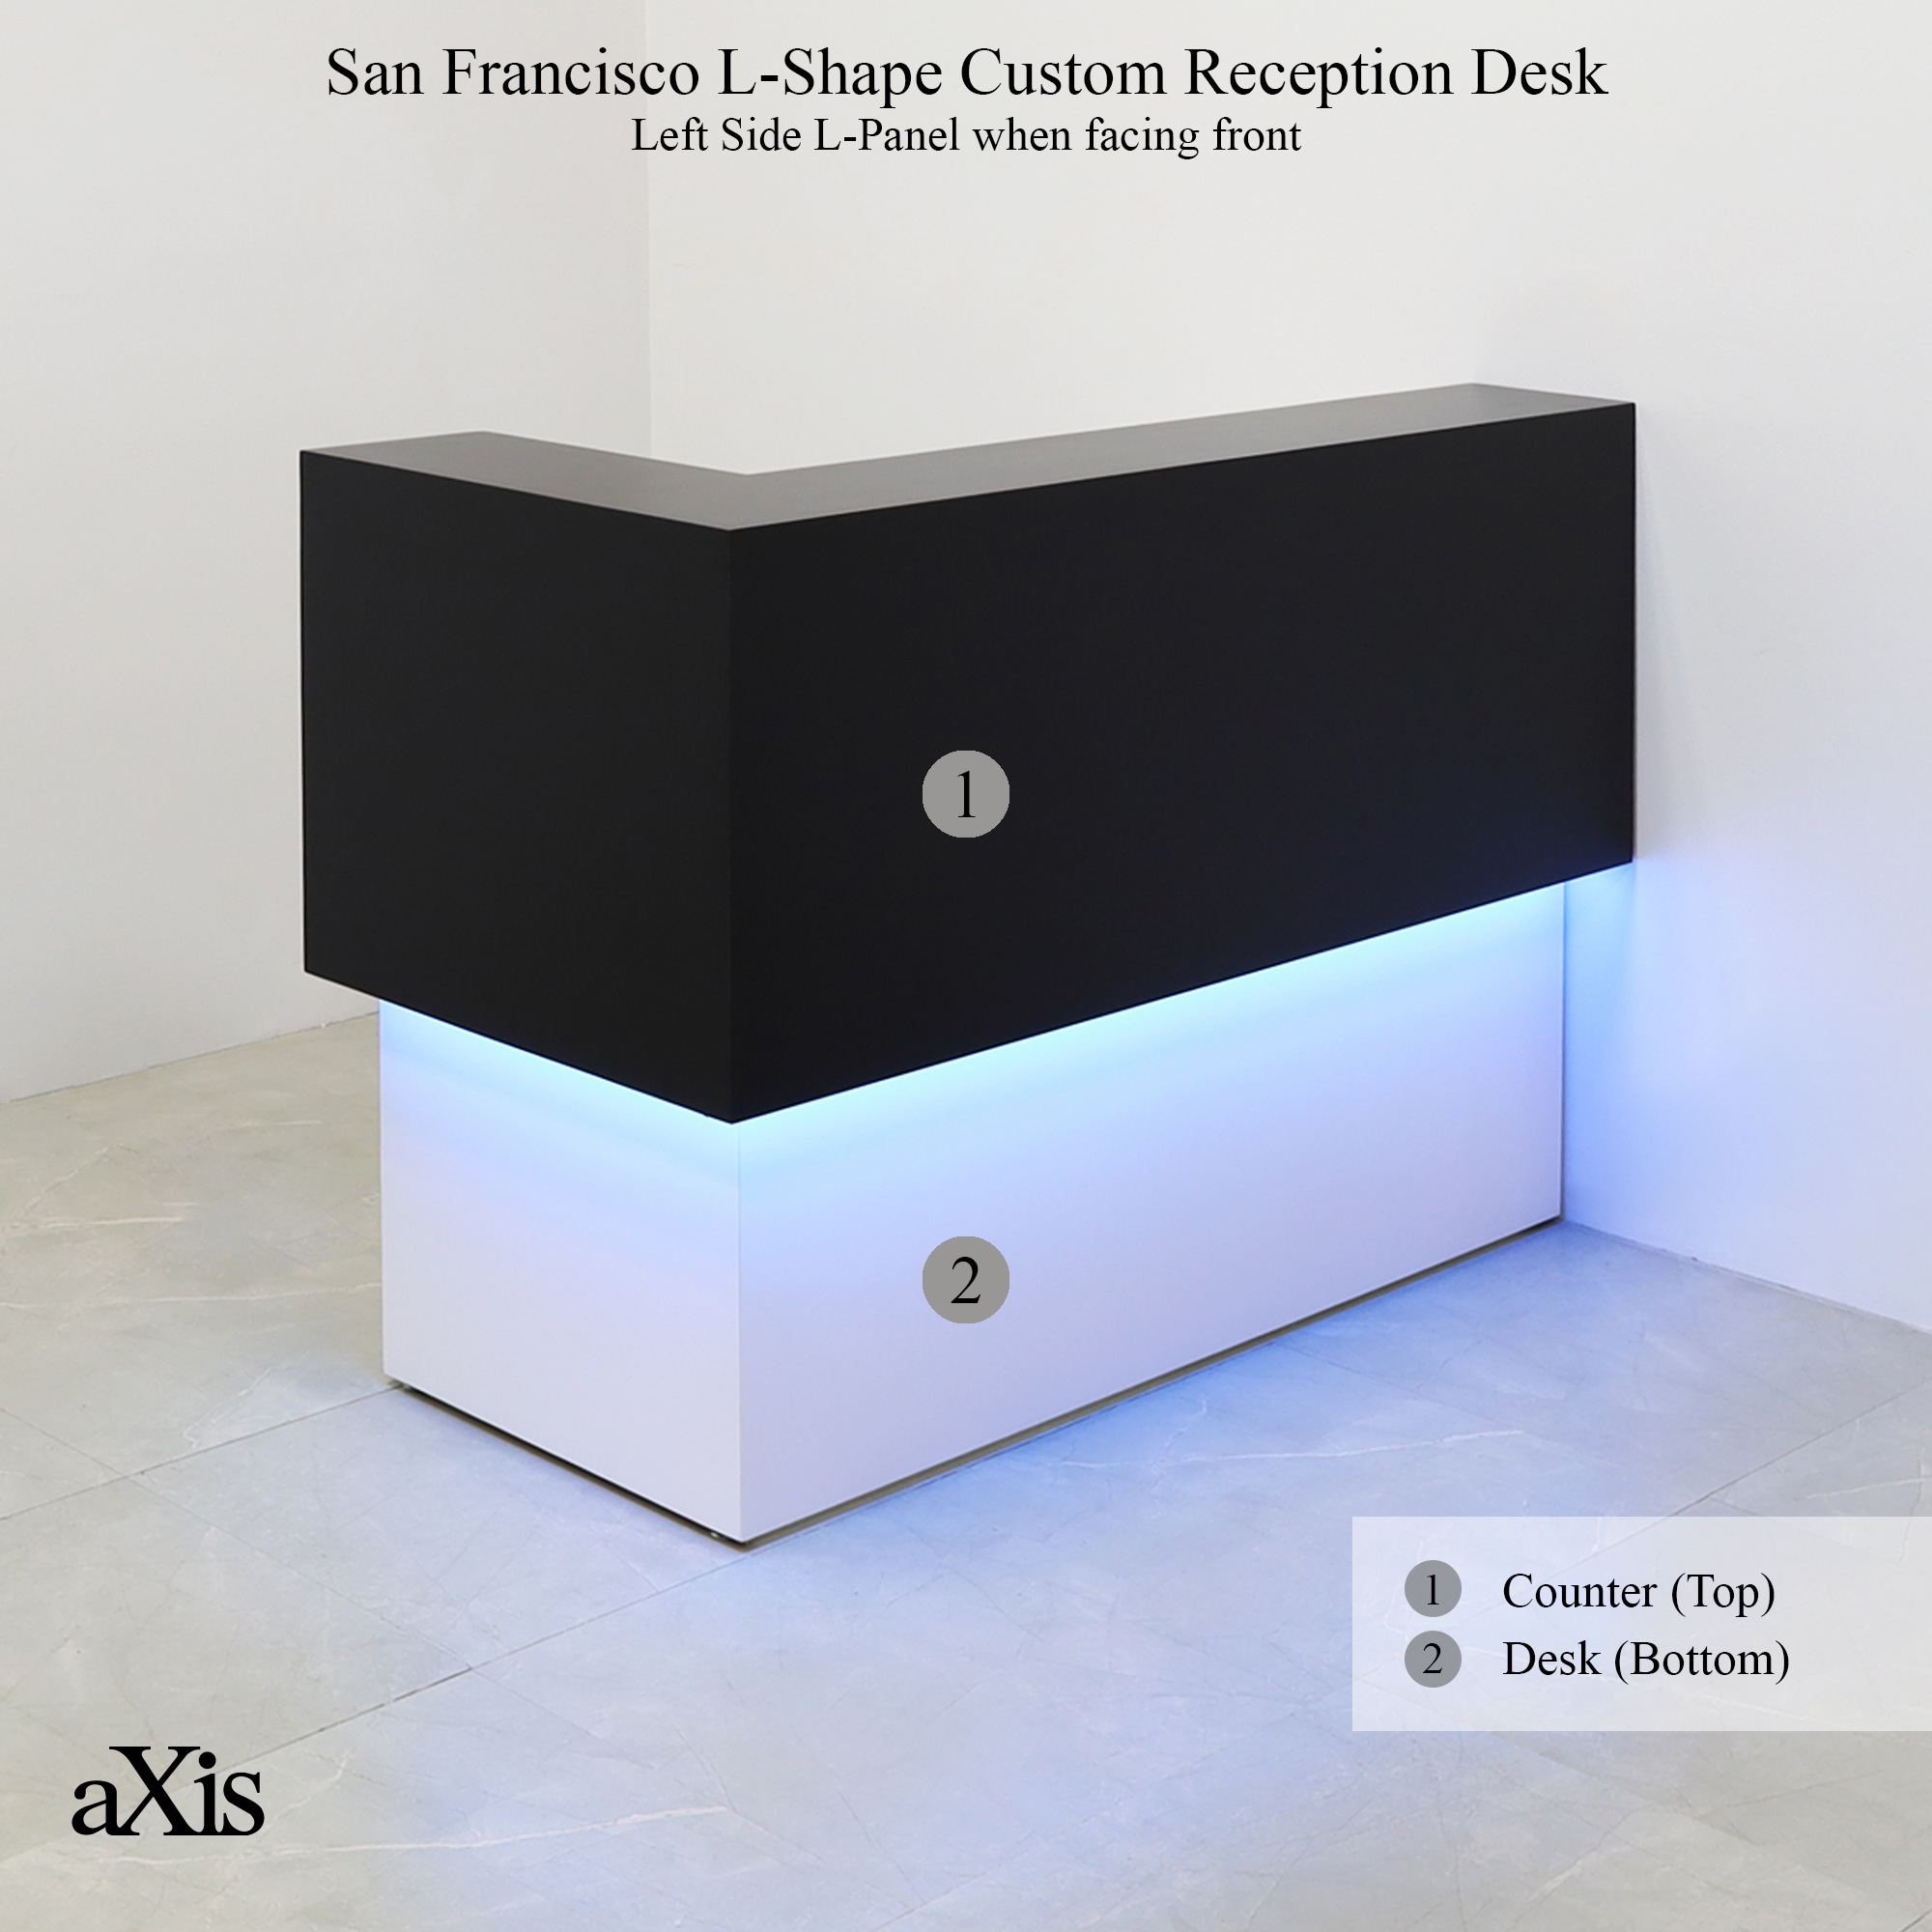 60-inch San Francisco L-Shape Reception Desk, left l-panel side when facing front in black matte laminate counter and white matte laminate desk, with color LED, shown here.